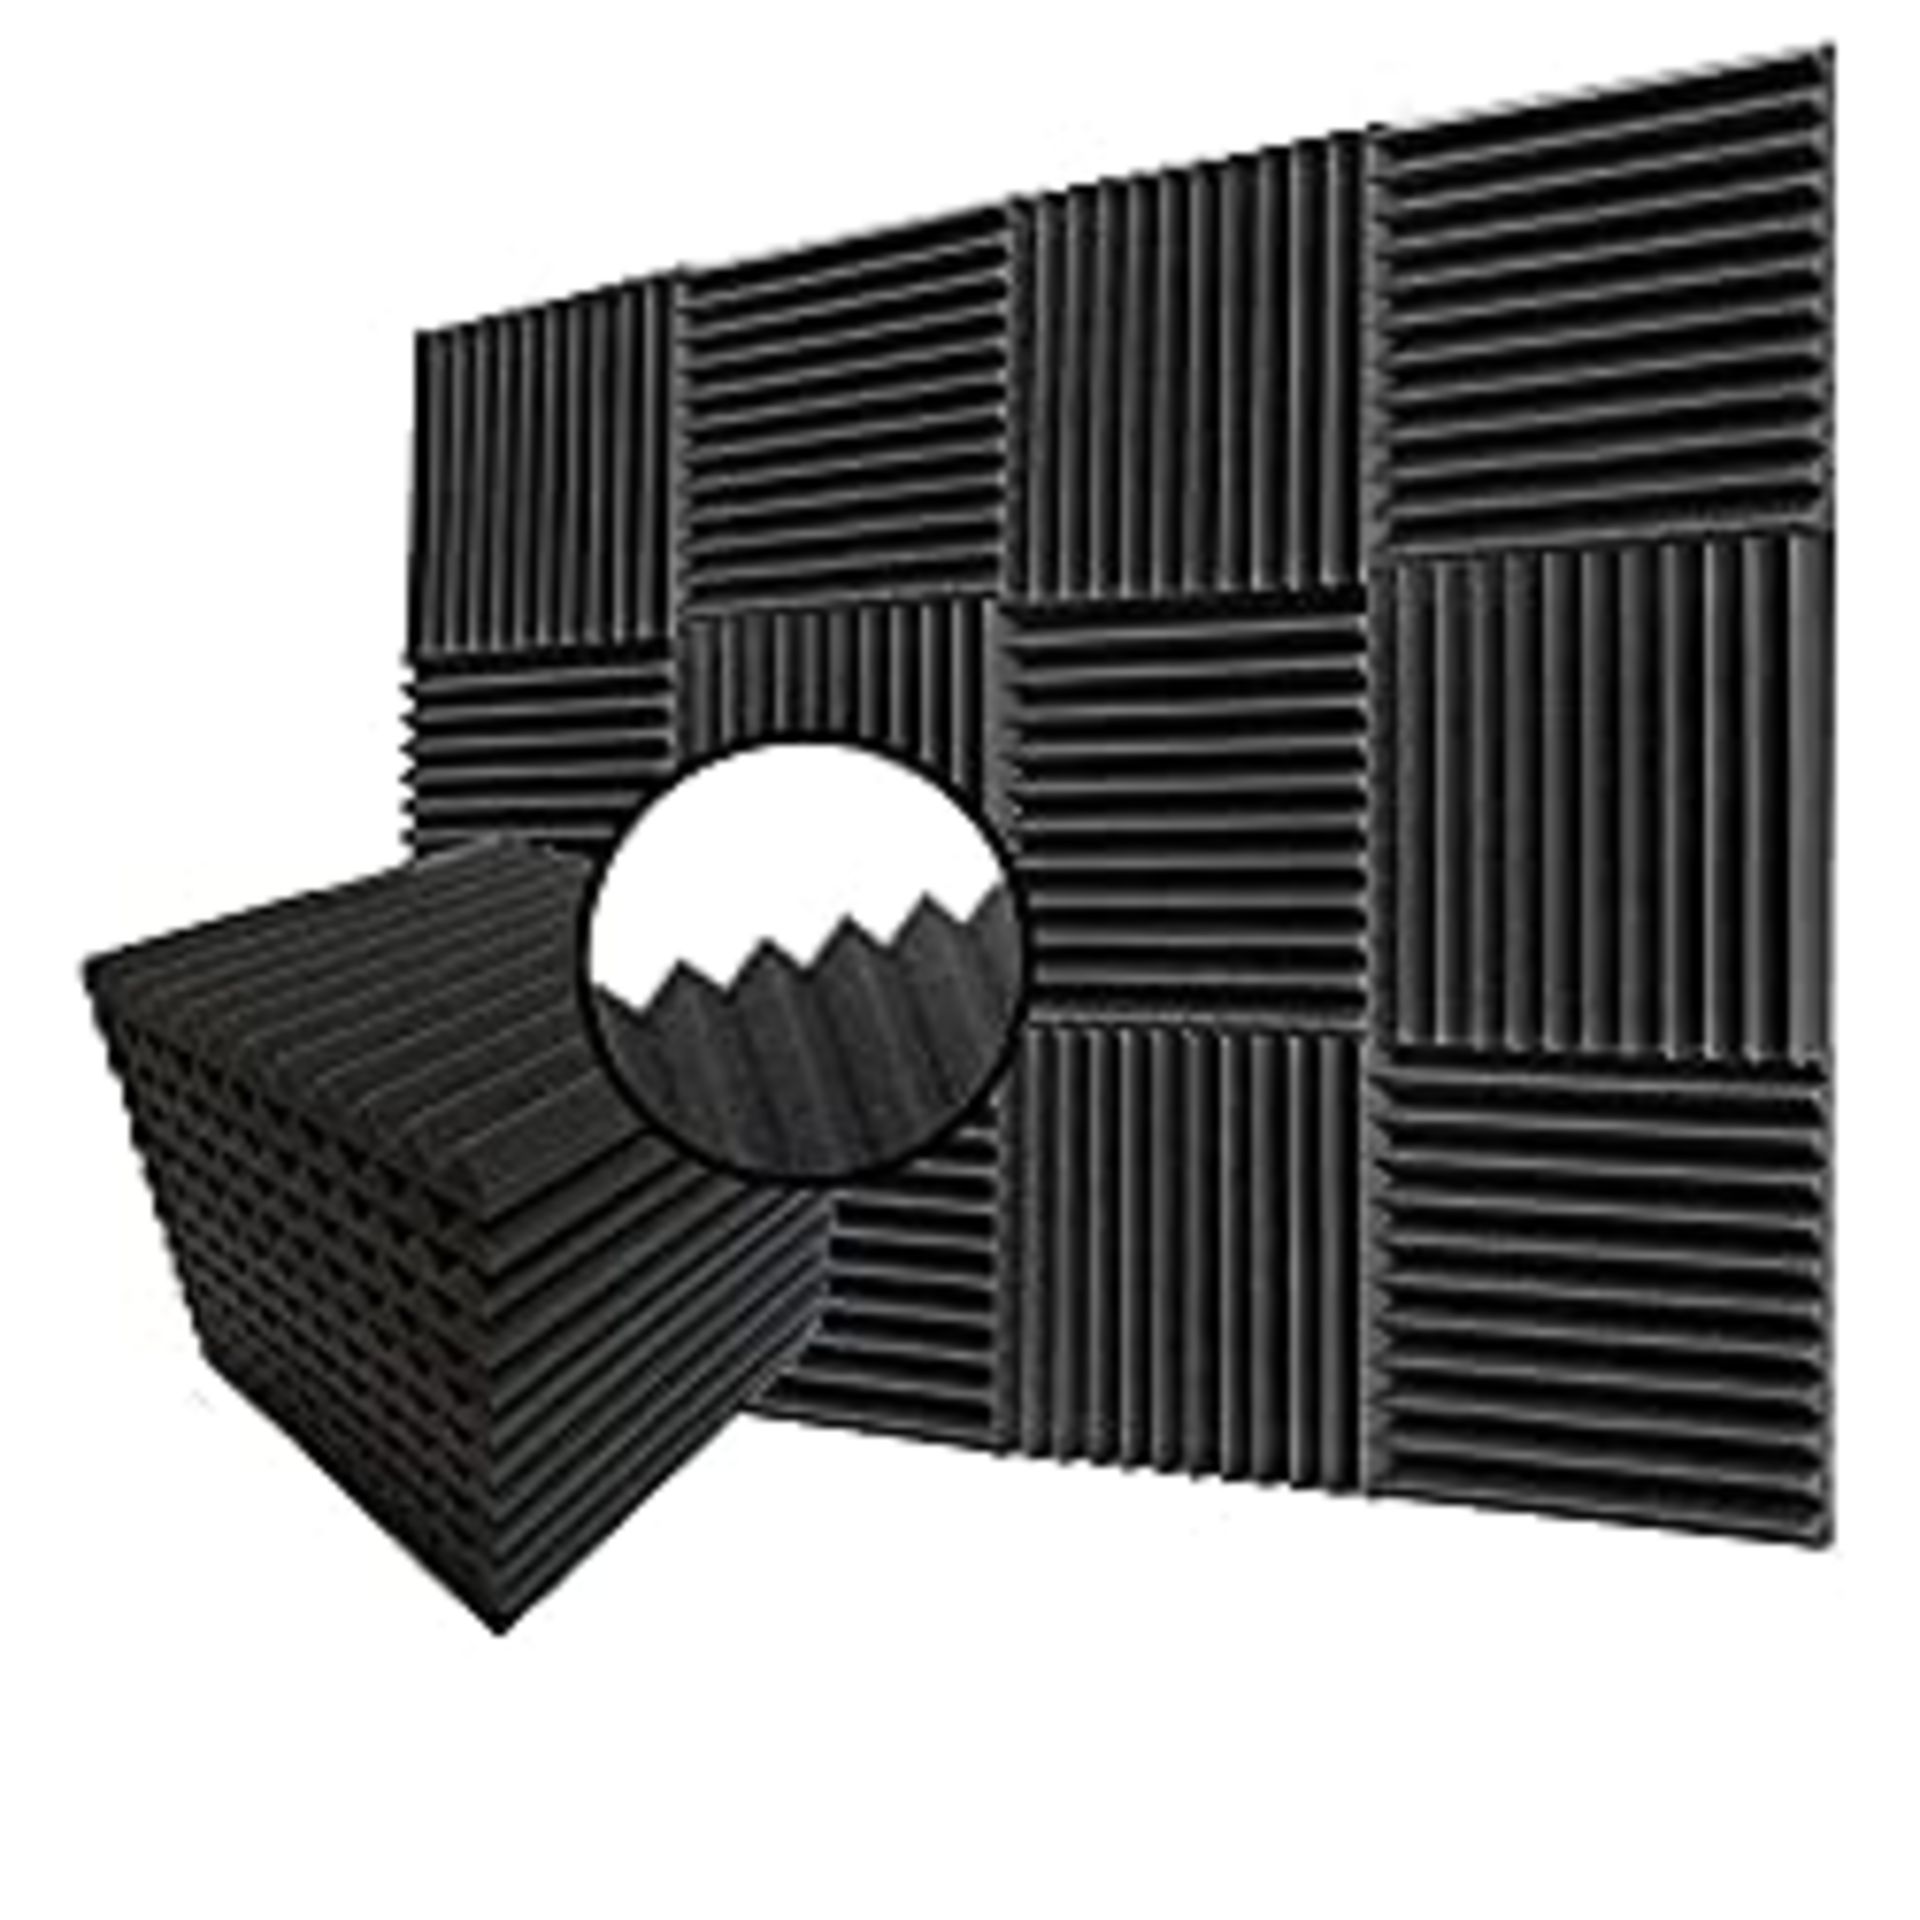 RRP £31.99 uyoyous 24 Packs Acoustic Foam Panels 30x30x2.5cm Soundproofing